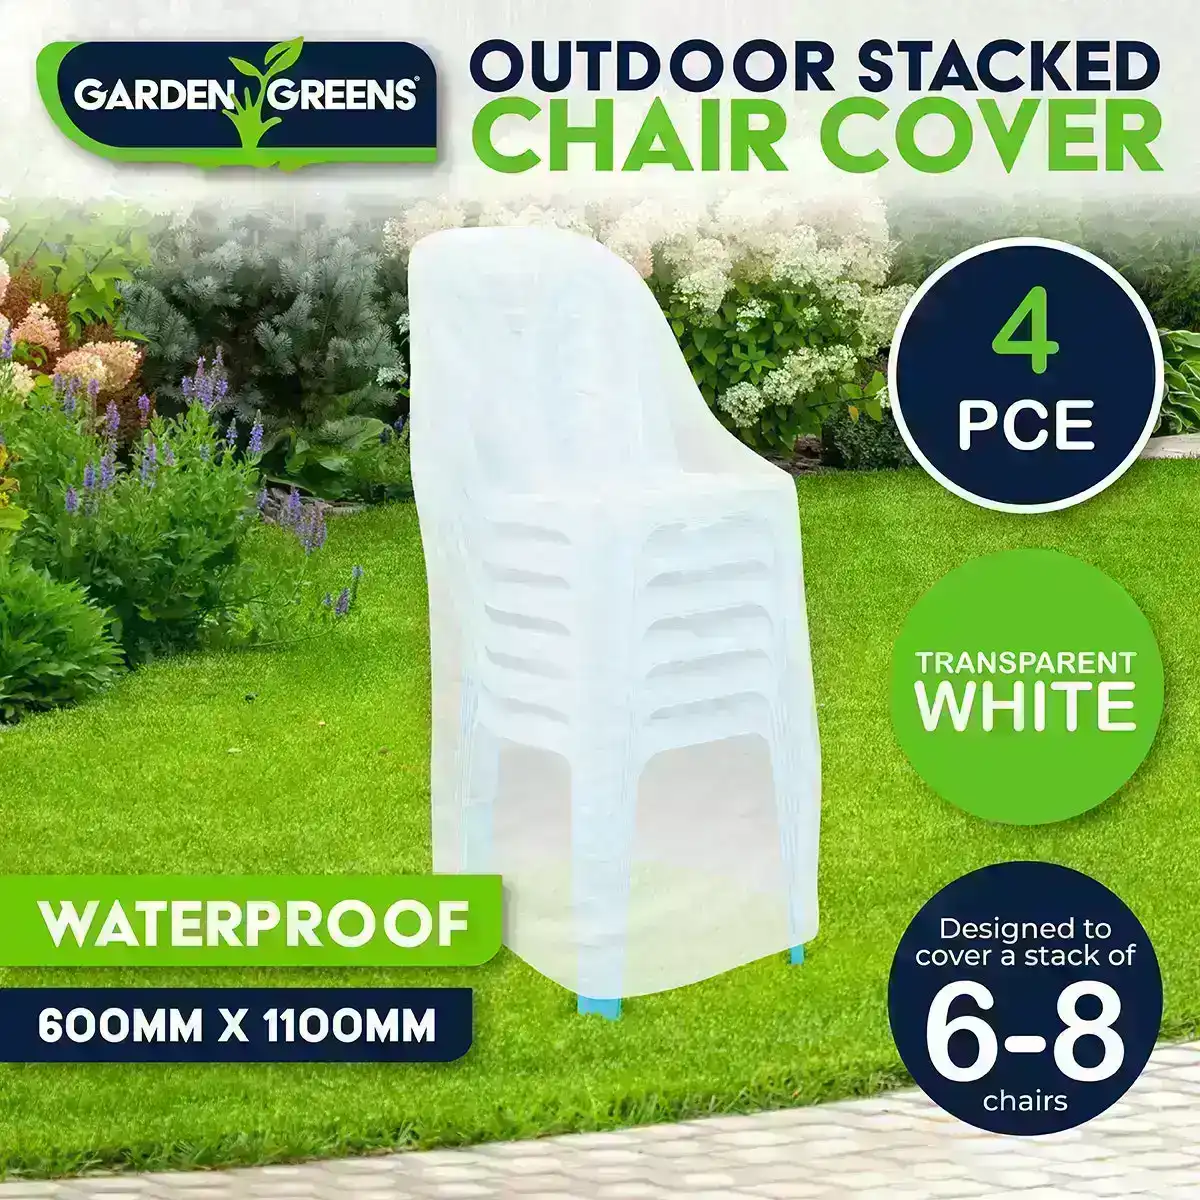 Garden Greens® 4PK Outdoor Stacked Chair Covers Waterproof 60cm x 110cm